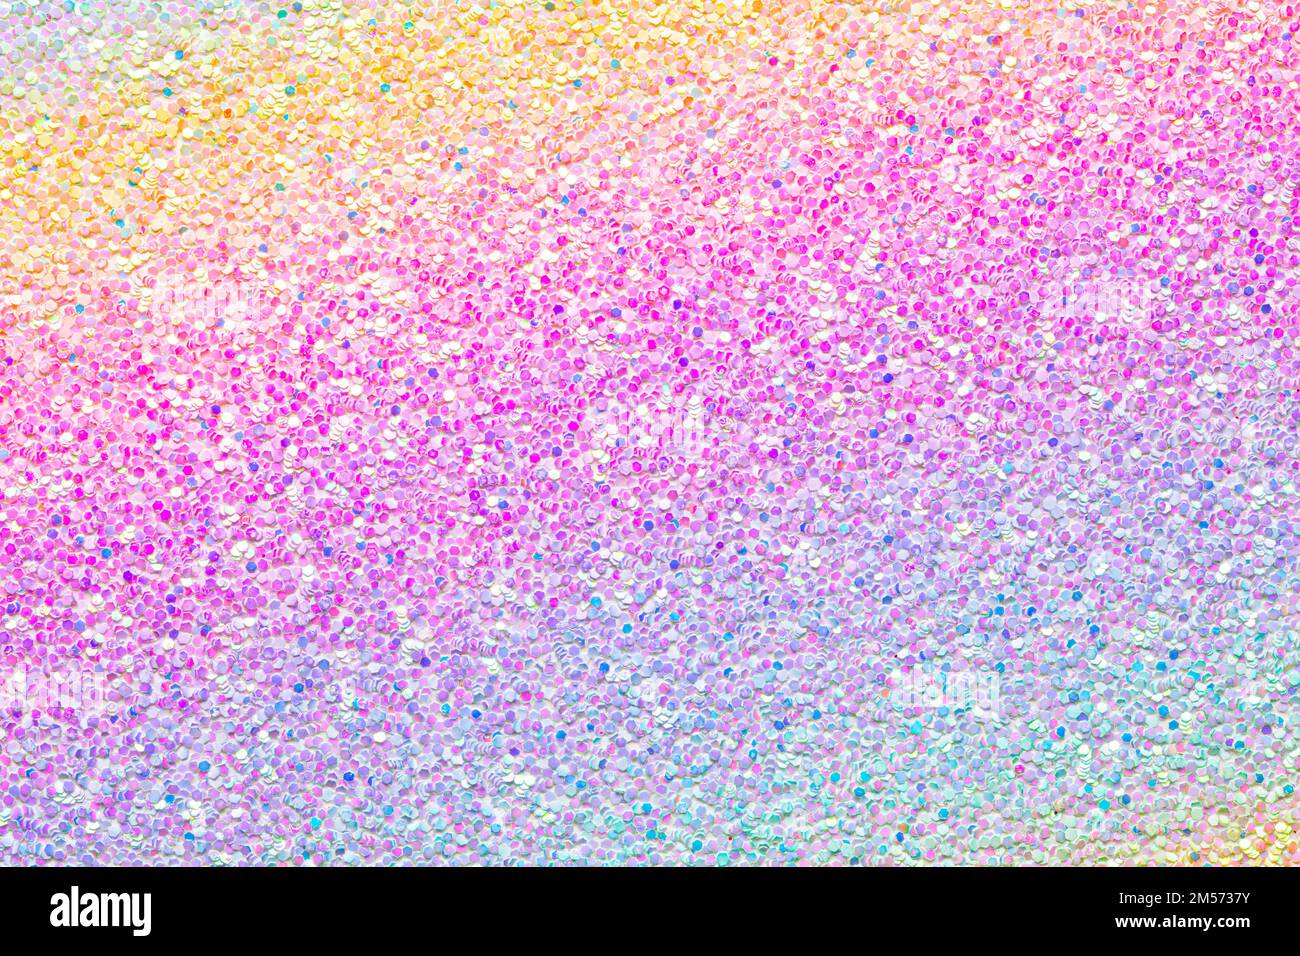 Light unicorn glitter texture background Stock Photo